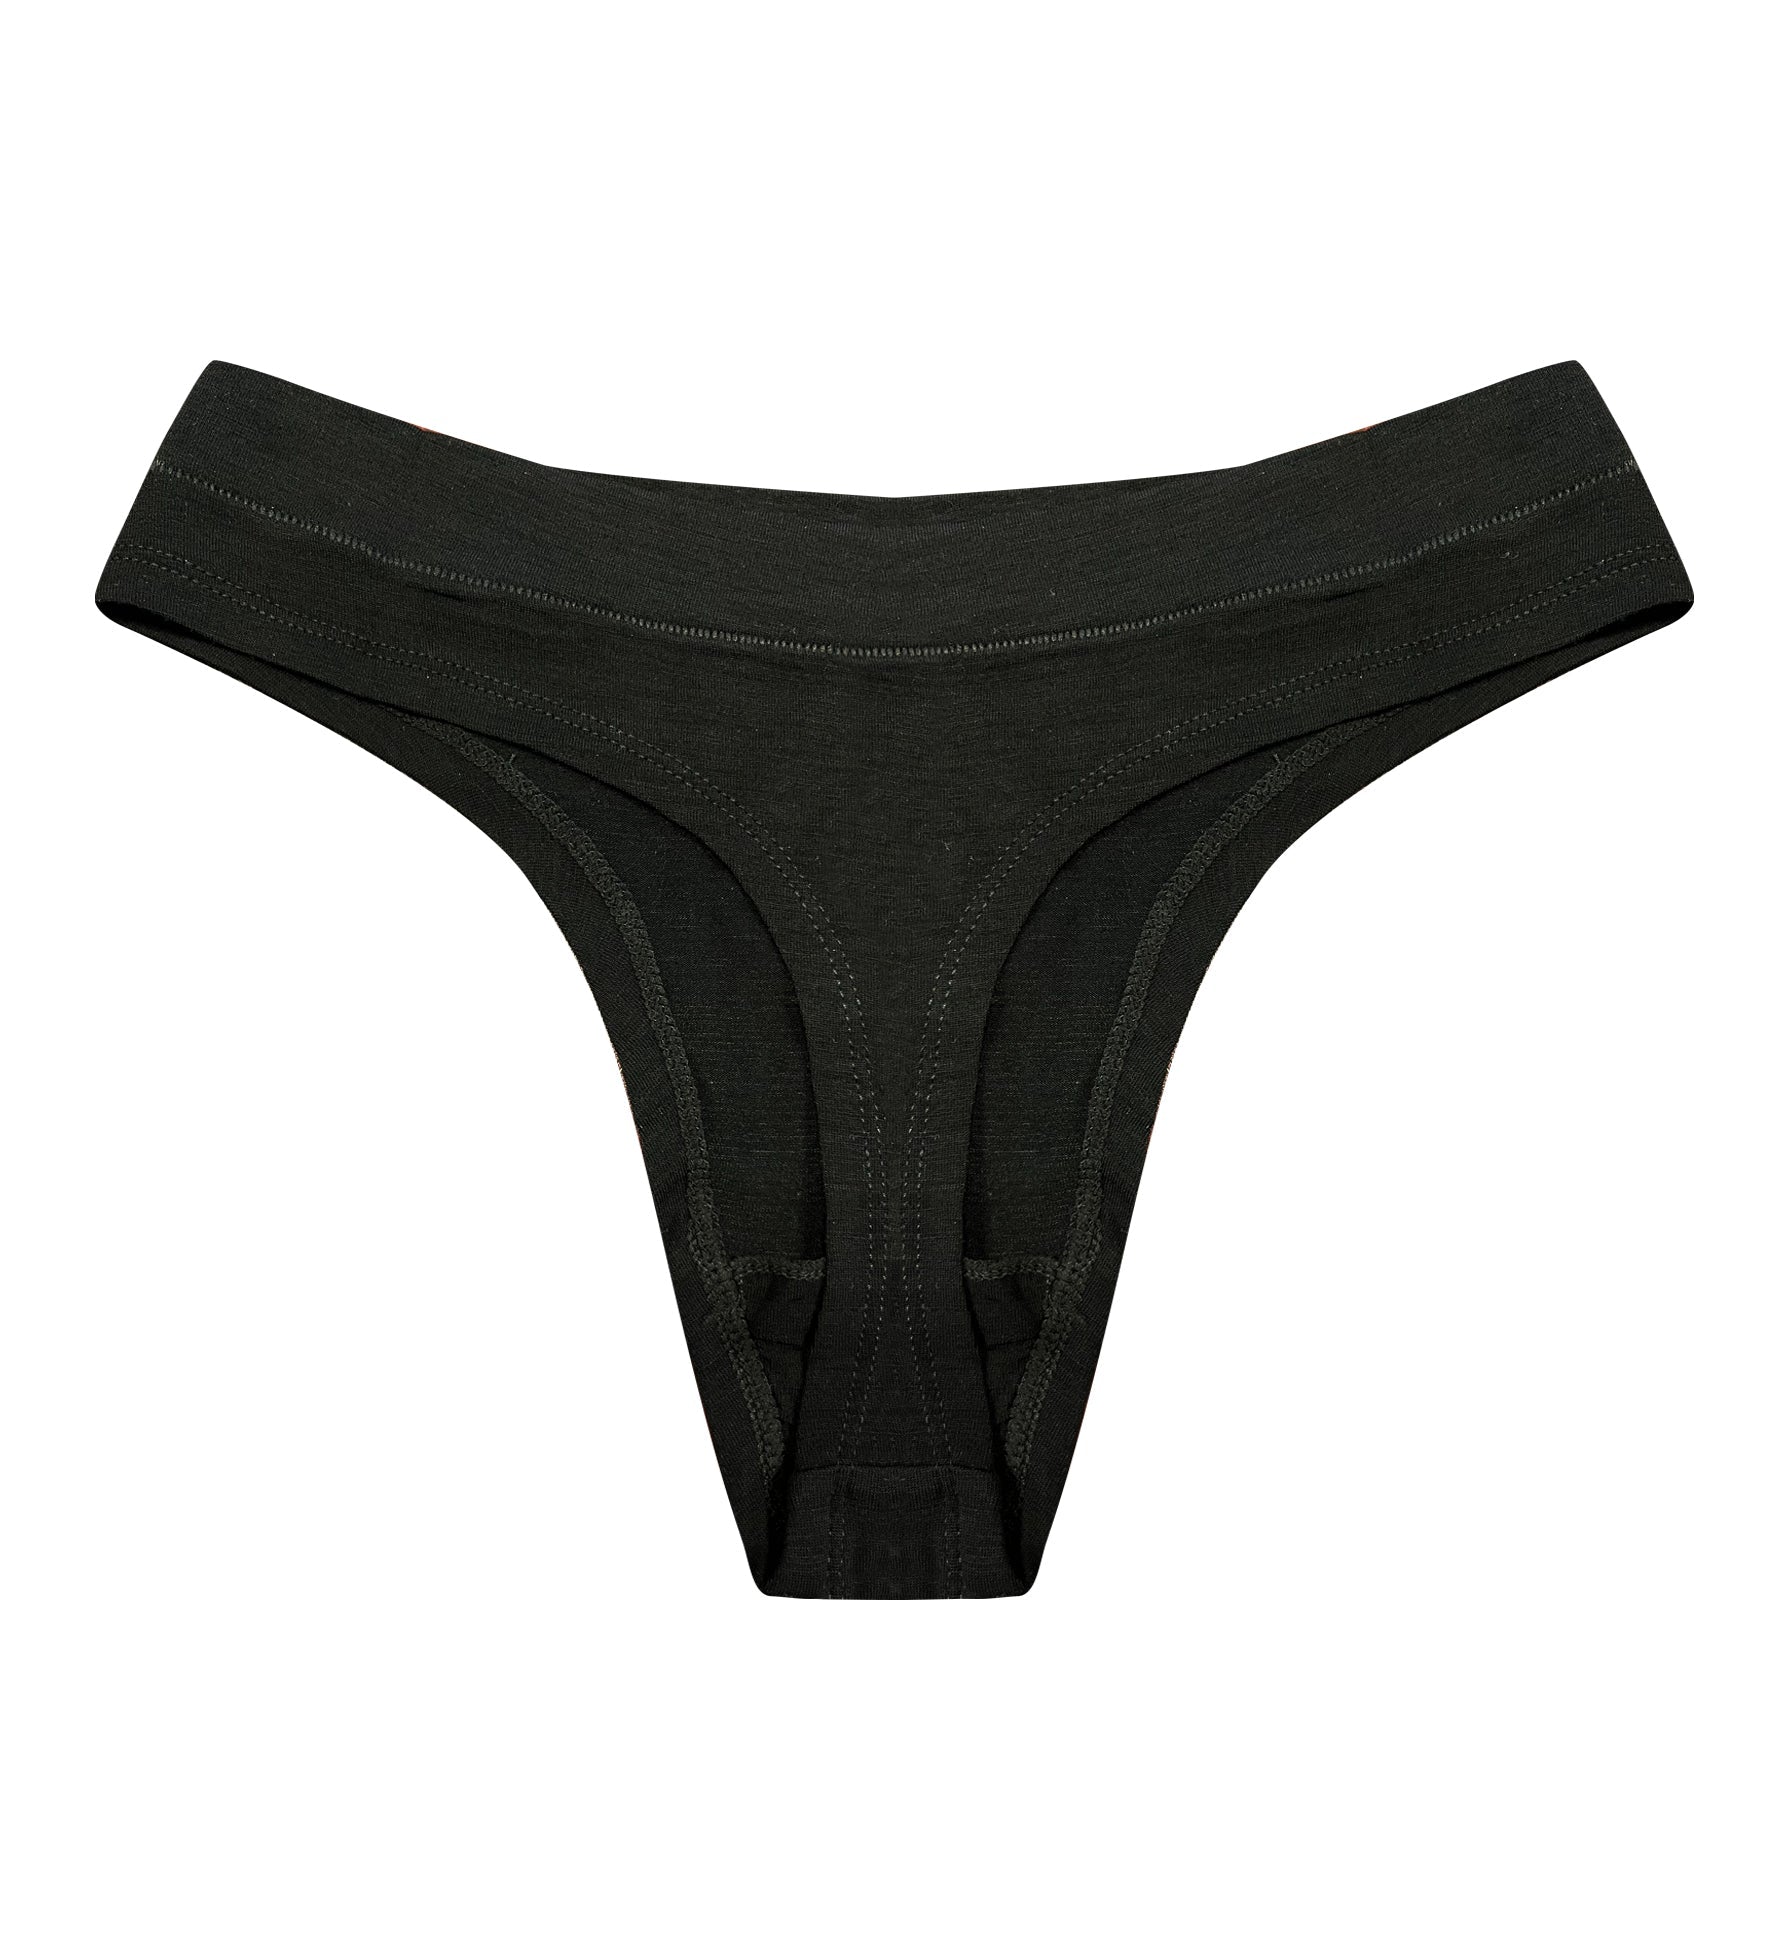 Women's Black Cotton Thong | Thongs for Women - Black Thong Underwear